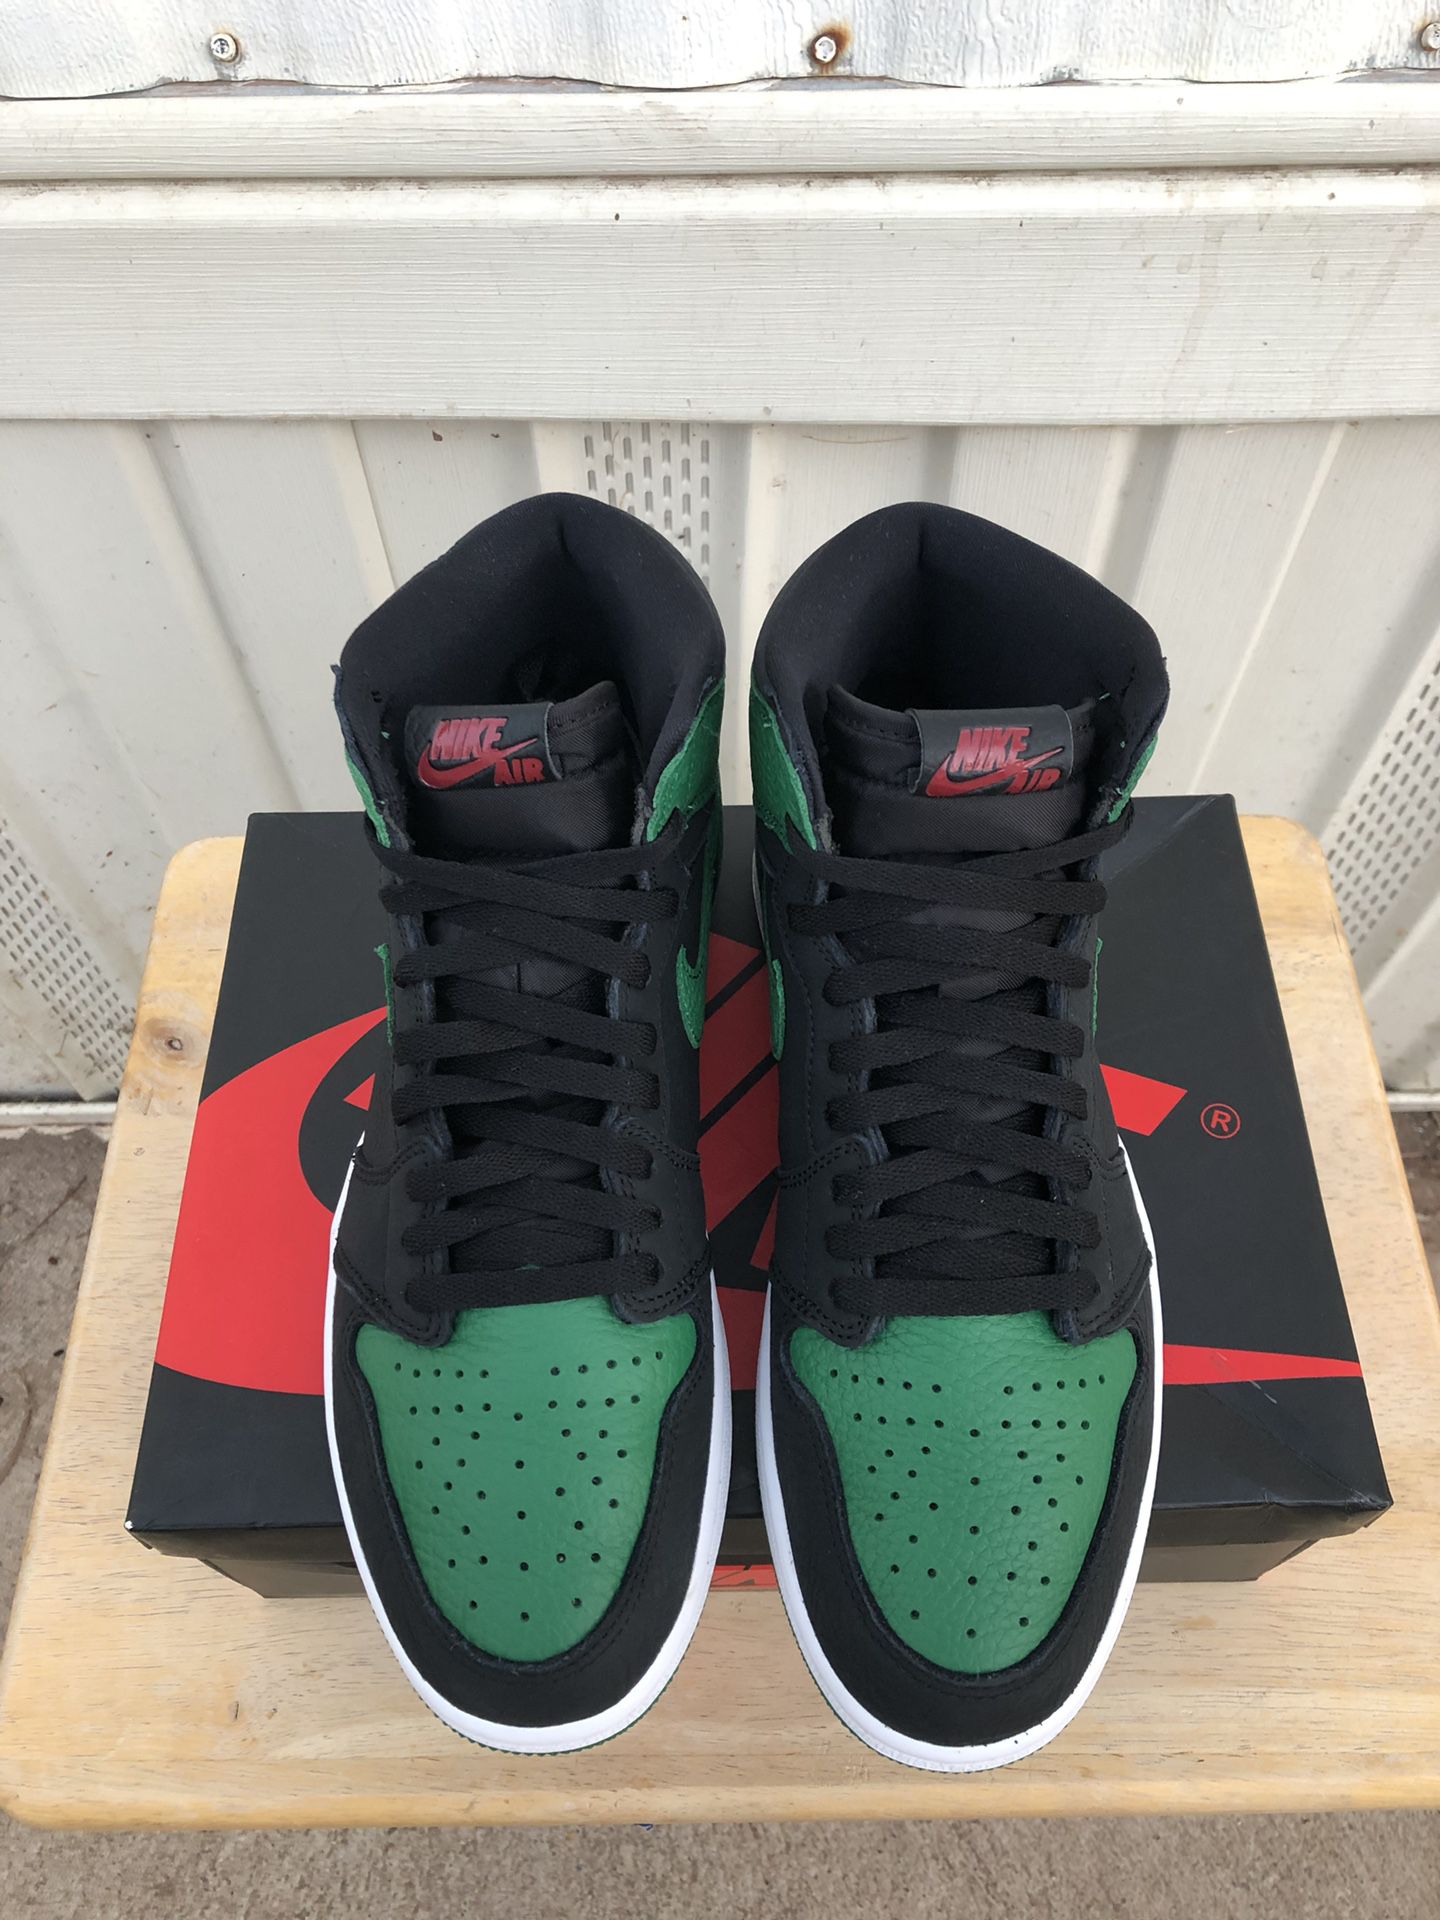 Air Jordan 1 retro “pine green” size 9.5